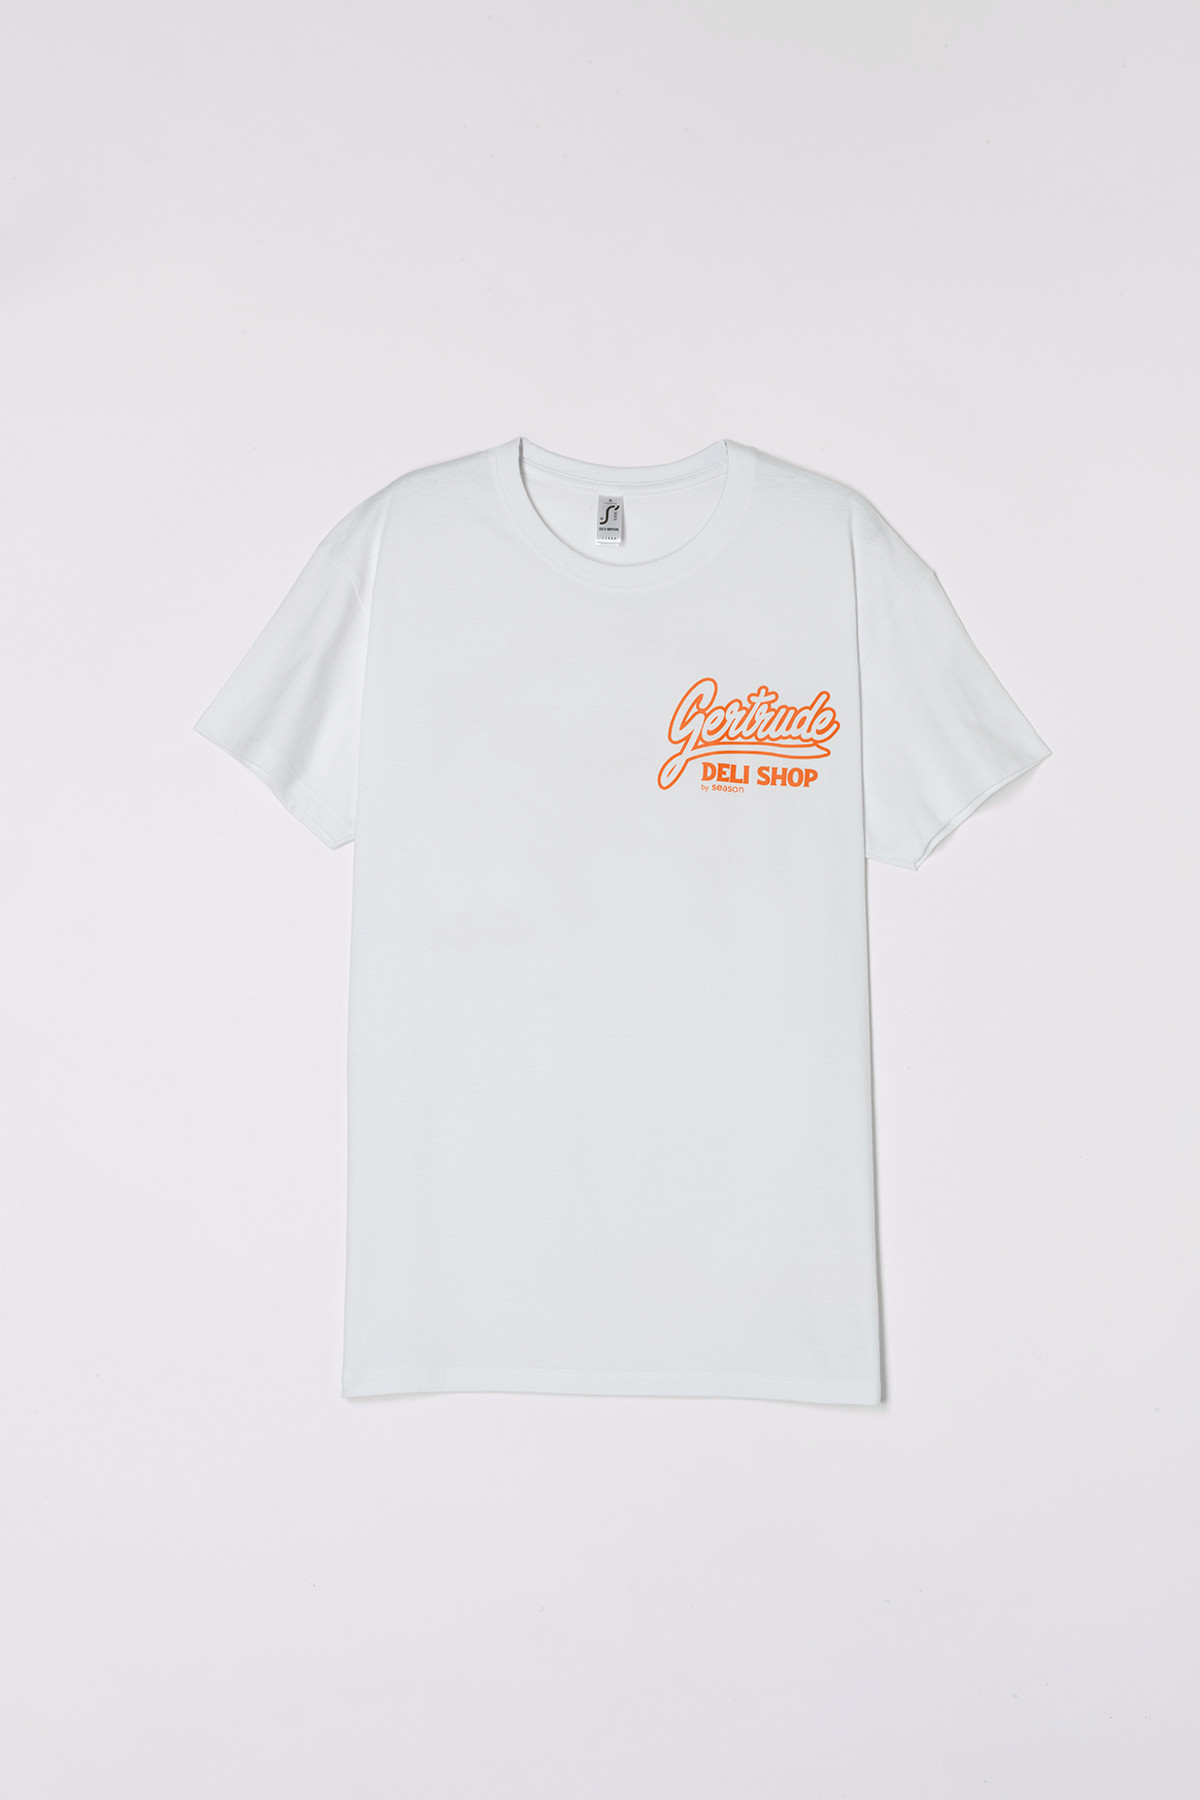 Deli Vanilla loose unisex t-shirt